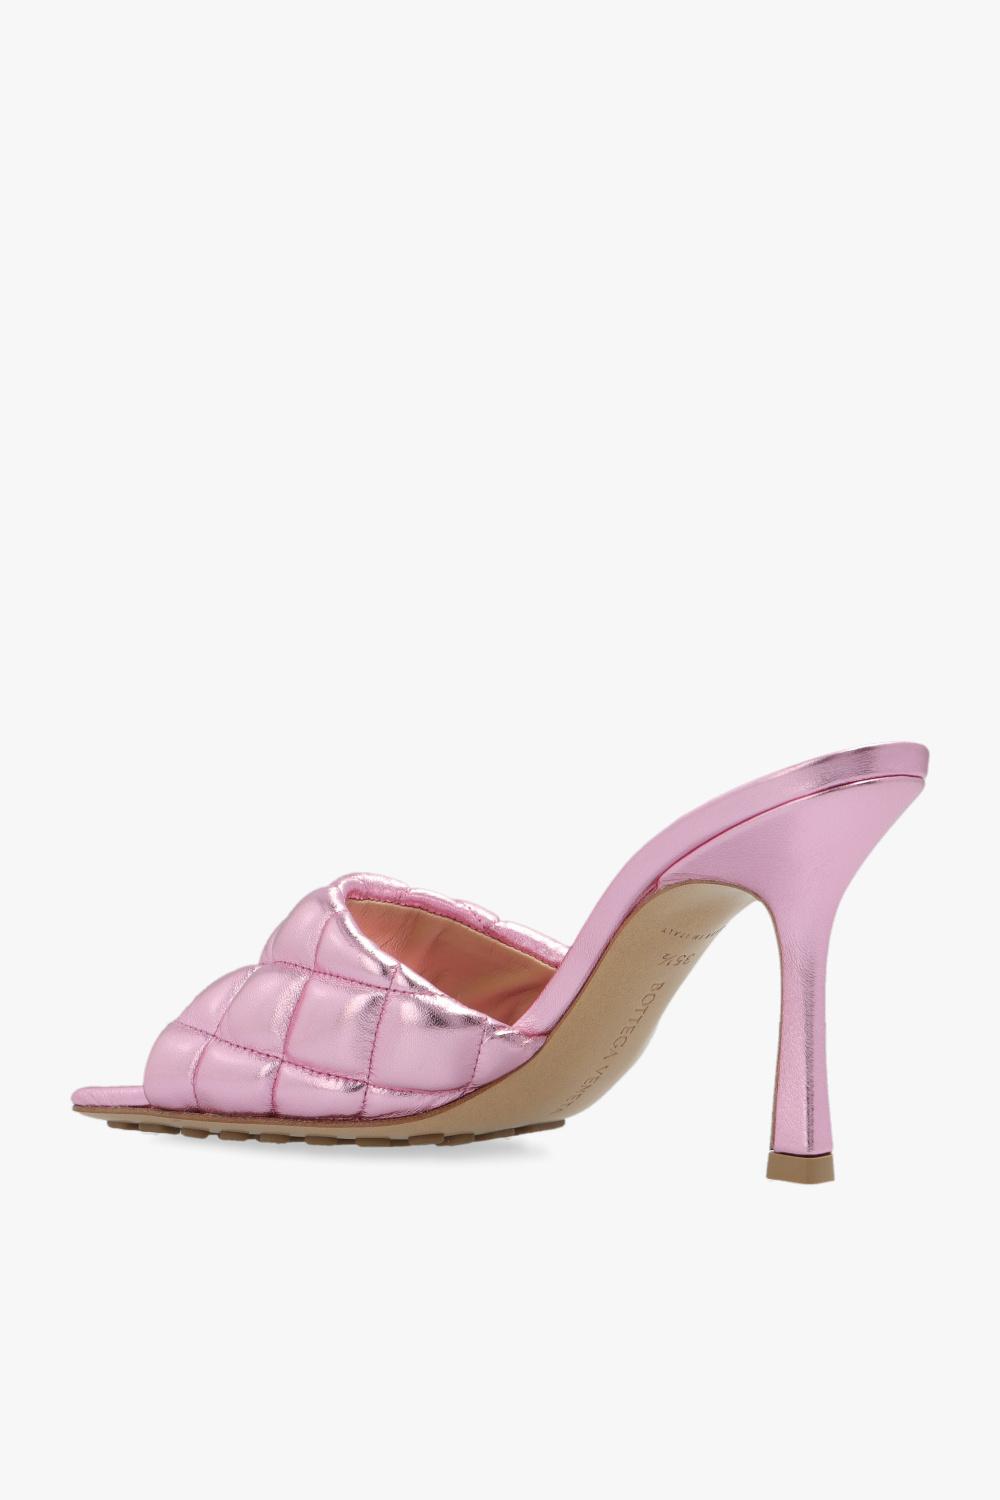 Bottega Veneta Leather 'padded' Heeled Mules in Pink | Lyst